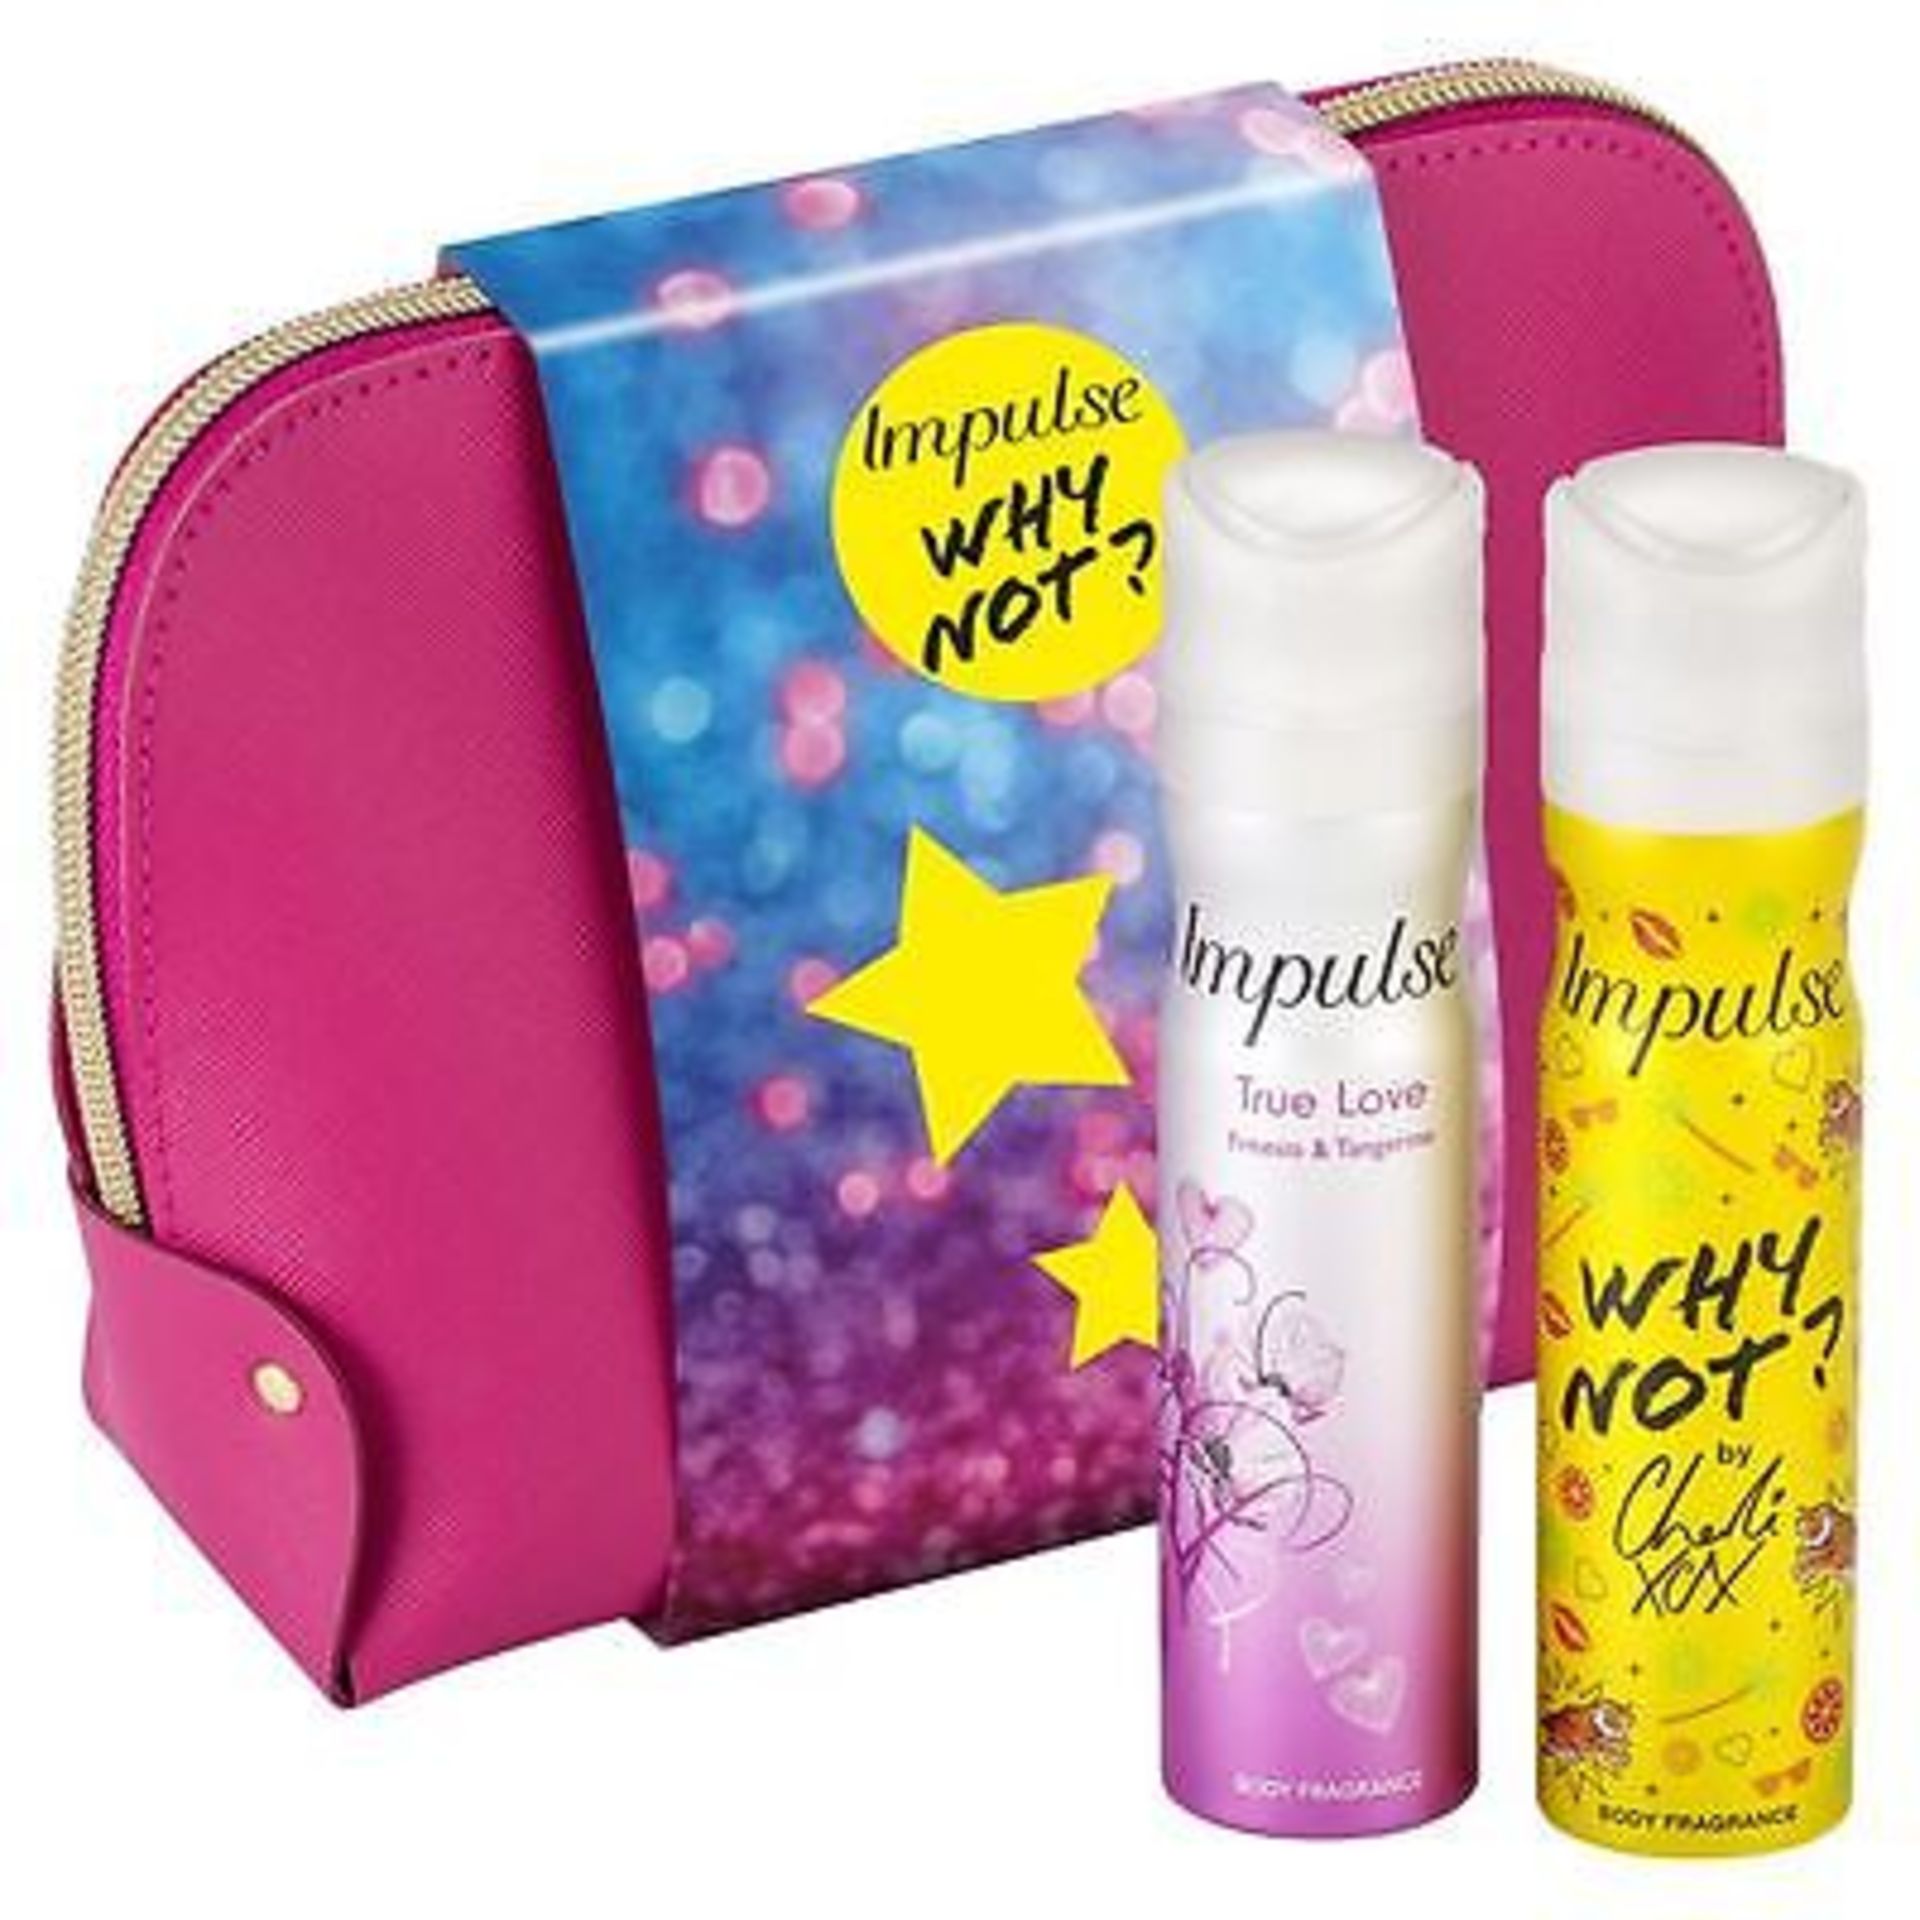 + VAT Brand New Impulse Why Not Body Fragrance Gift Set Amazon Price Â£12.20 - Ebay Price 9.99